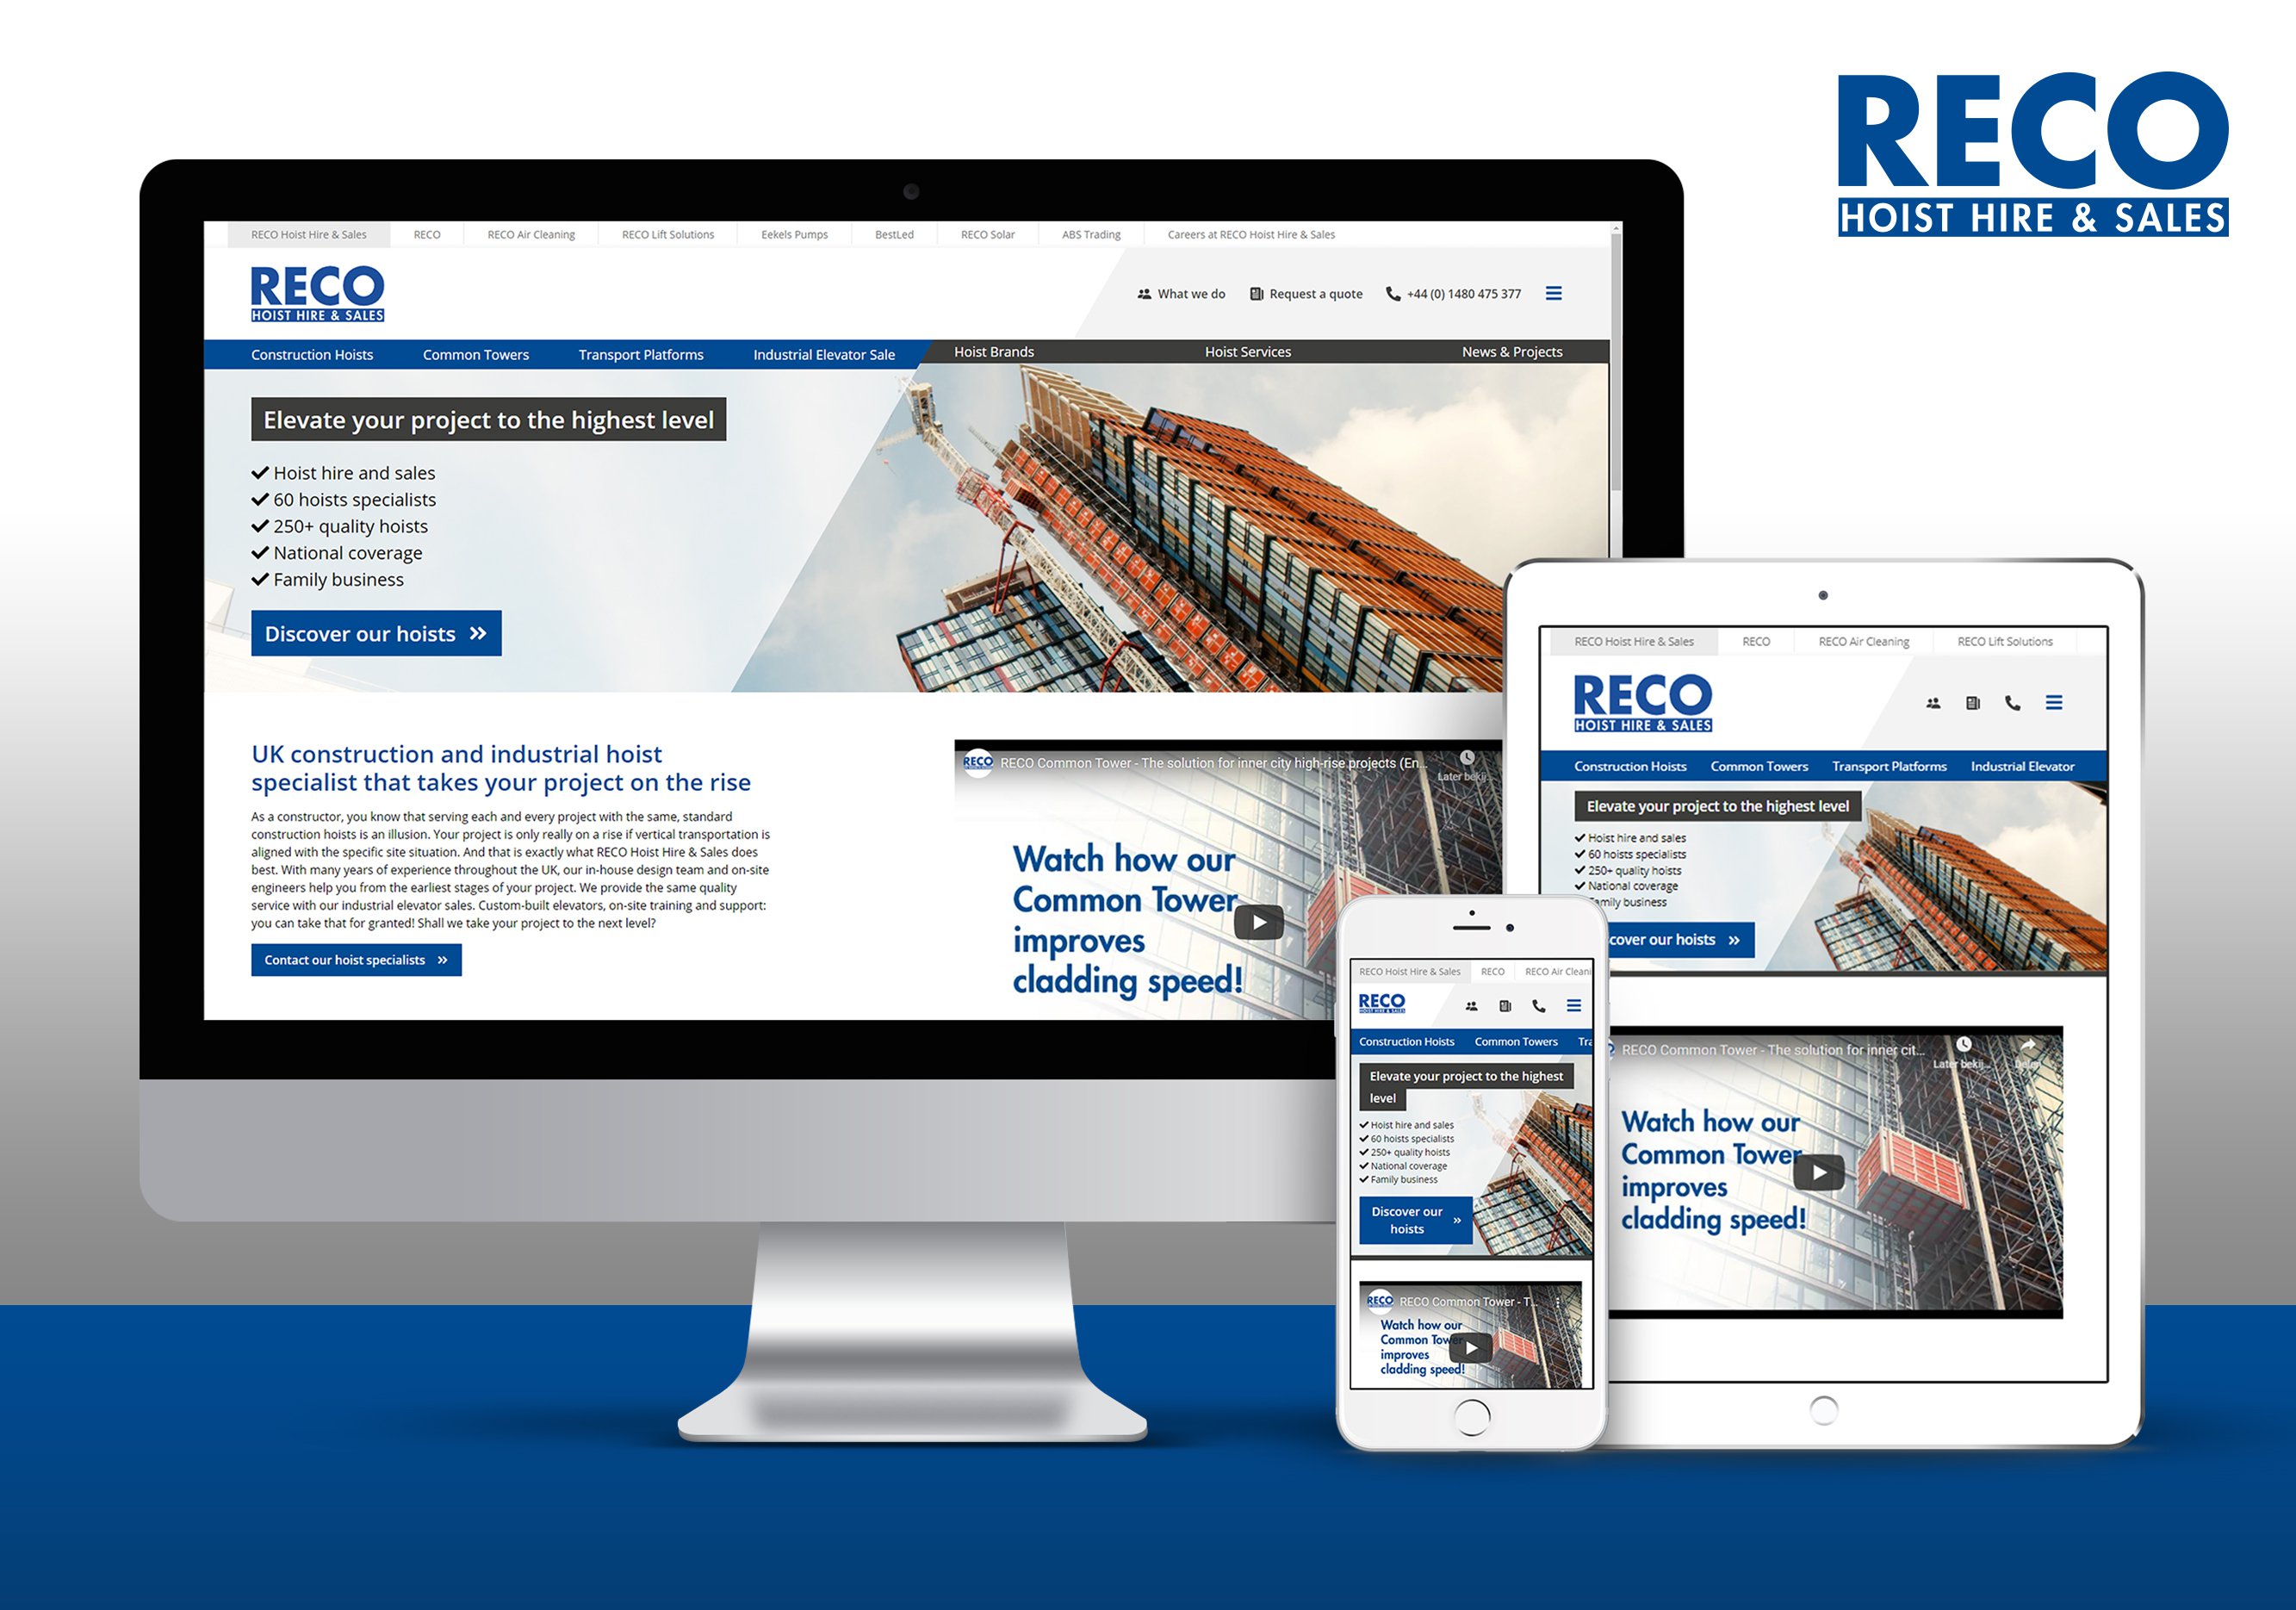 2020: RECO Hoist Hire & Sales launches new website